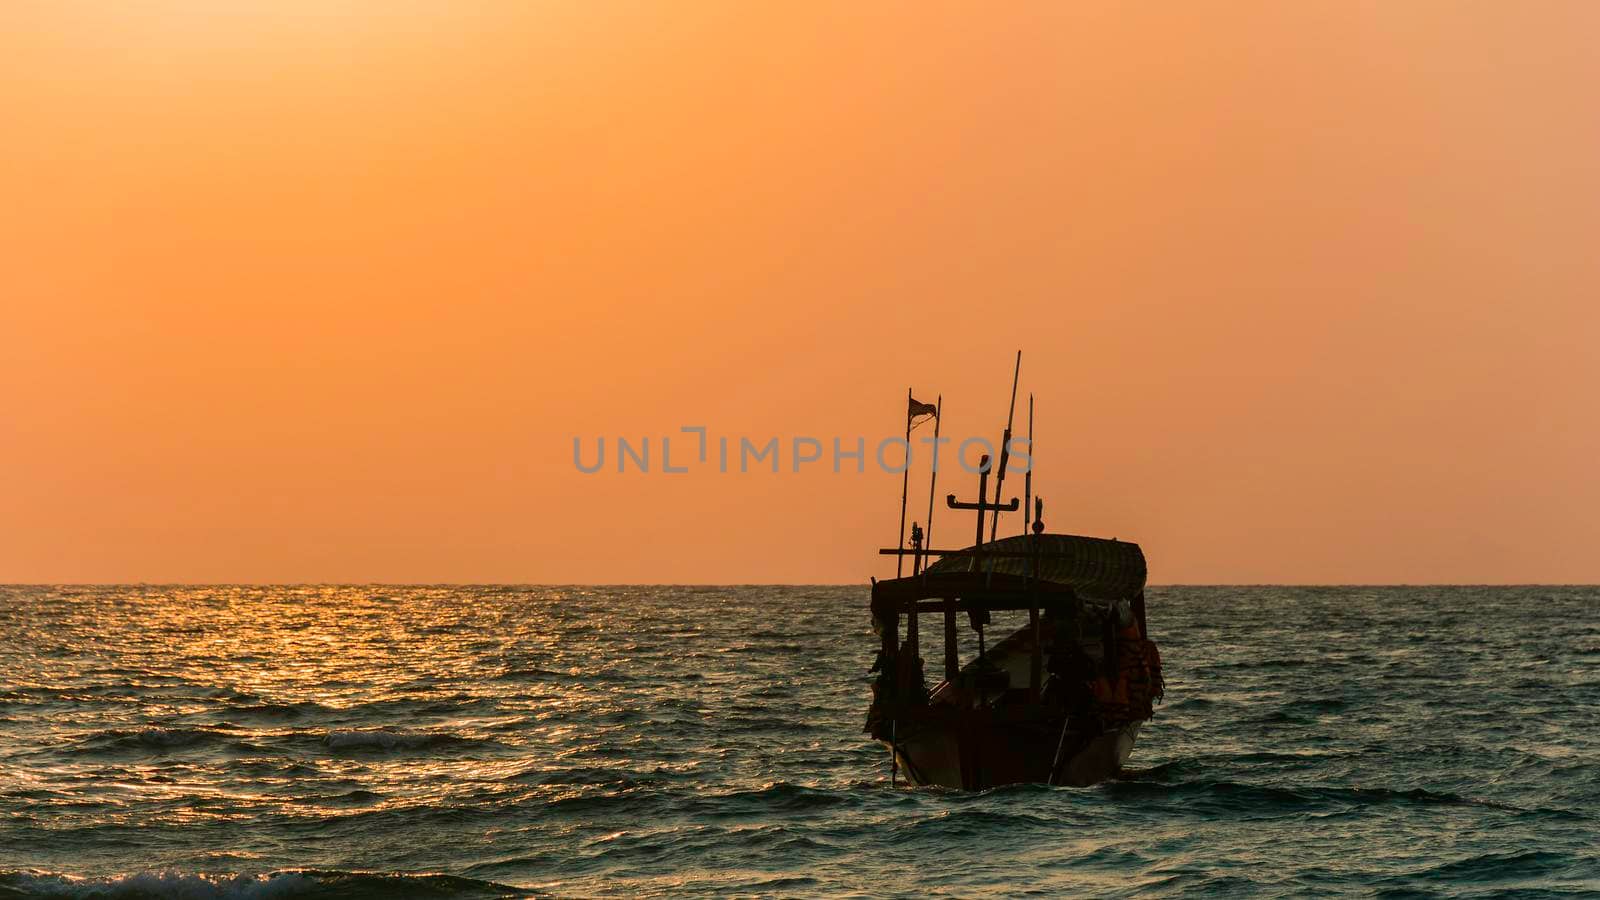 a silhouette boat on the ocean, coastline at sunrise, bule and orange colors